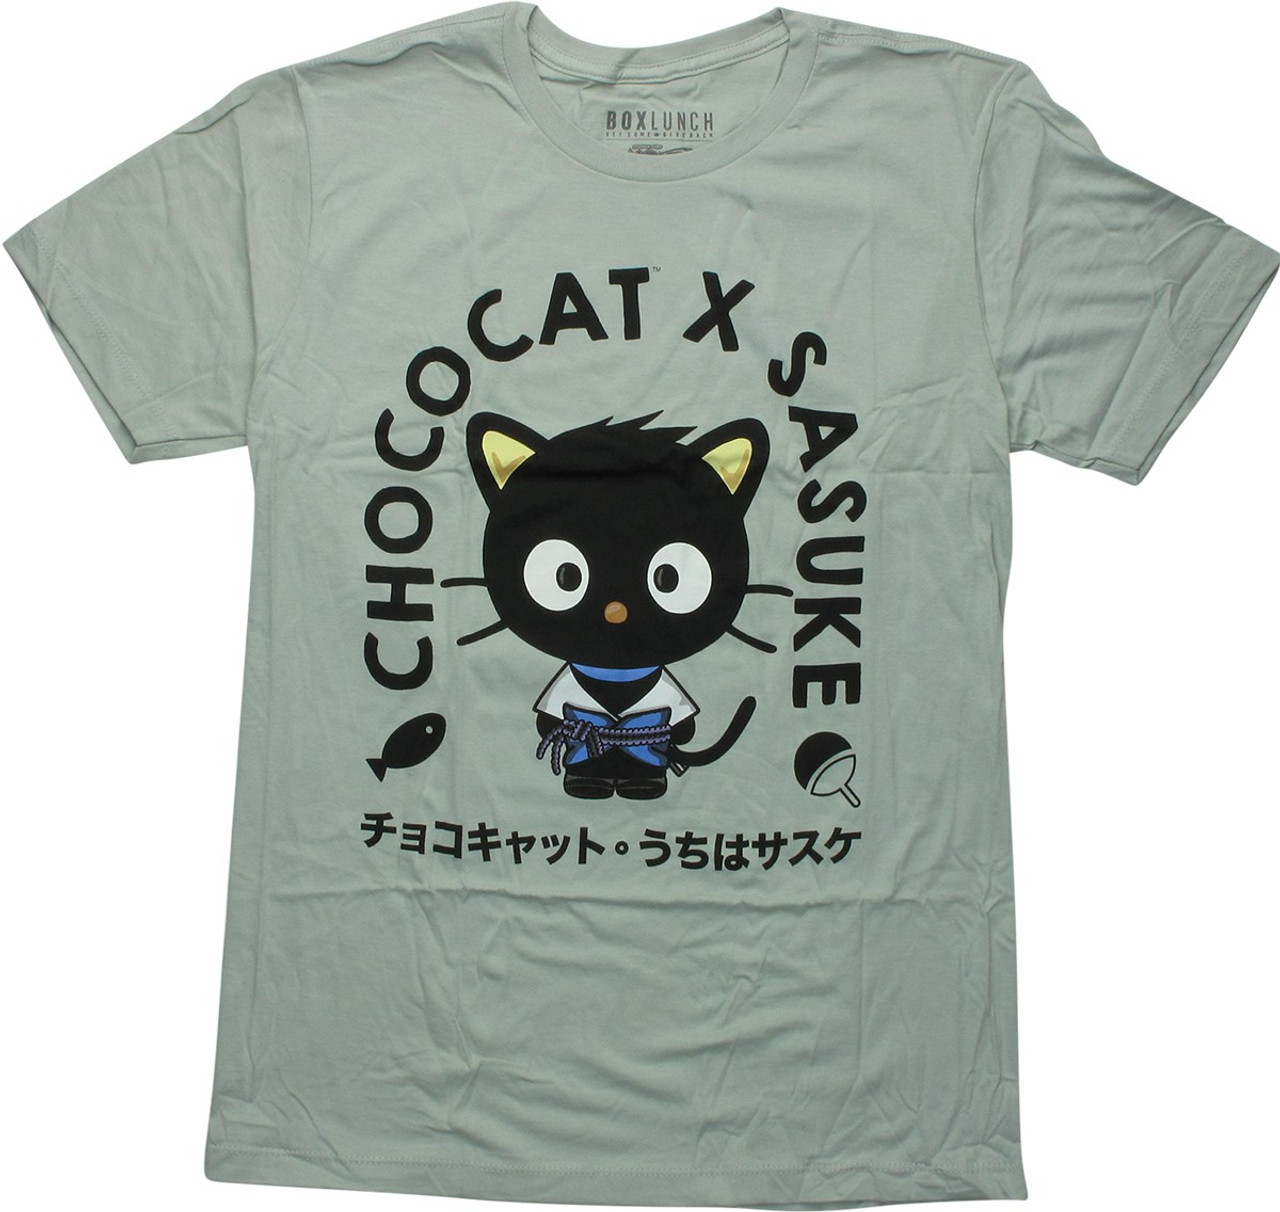 sasuke as a cat